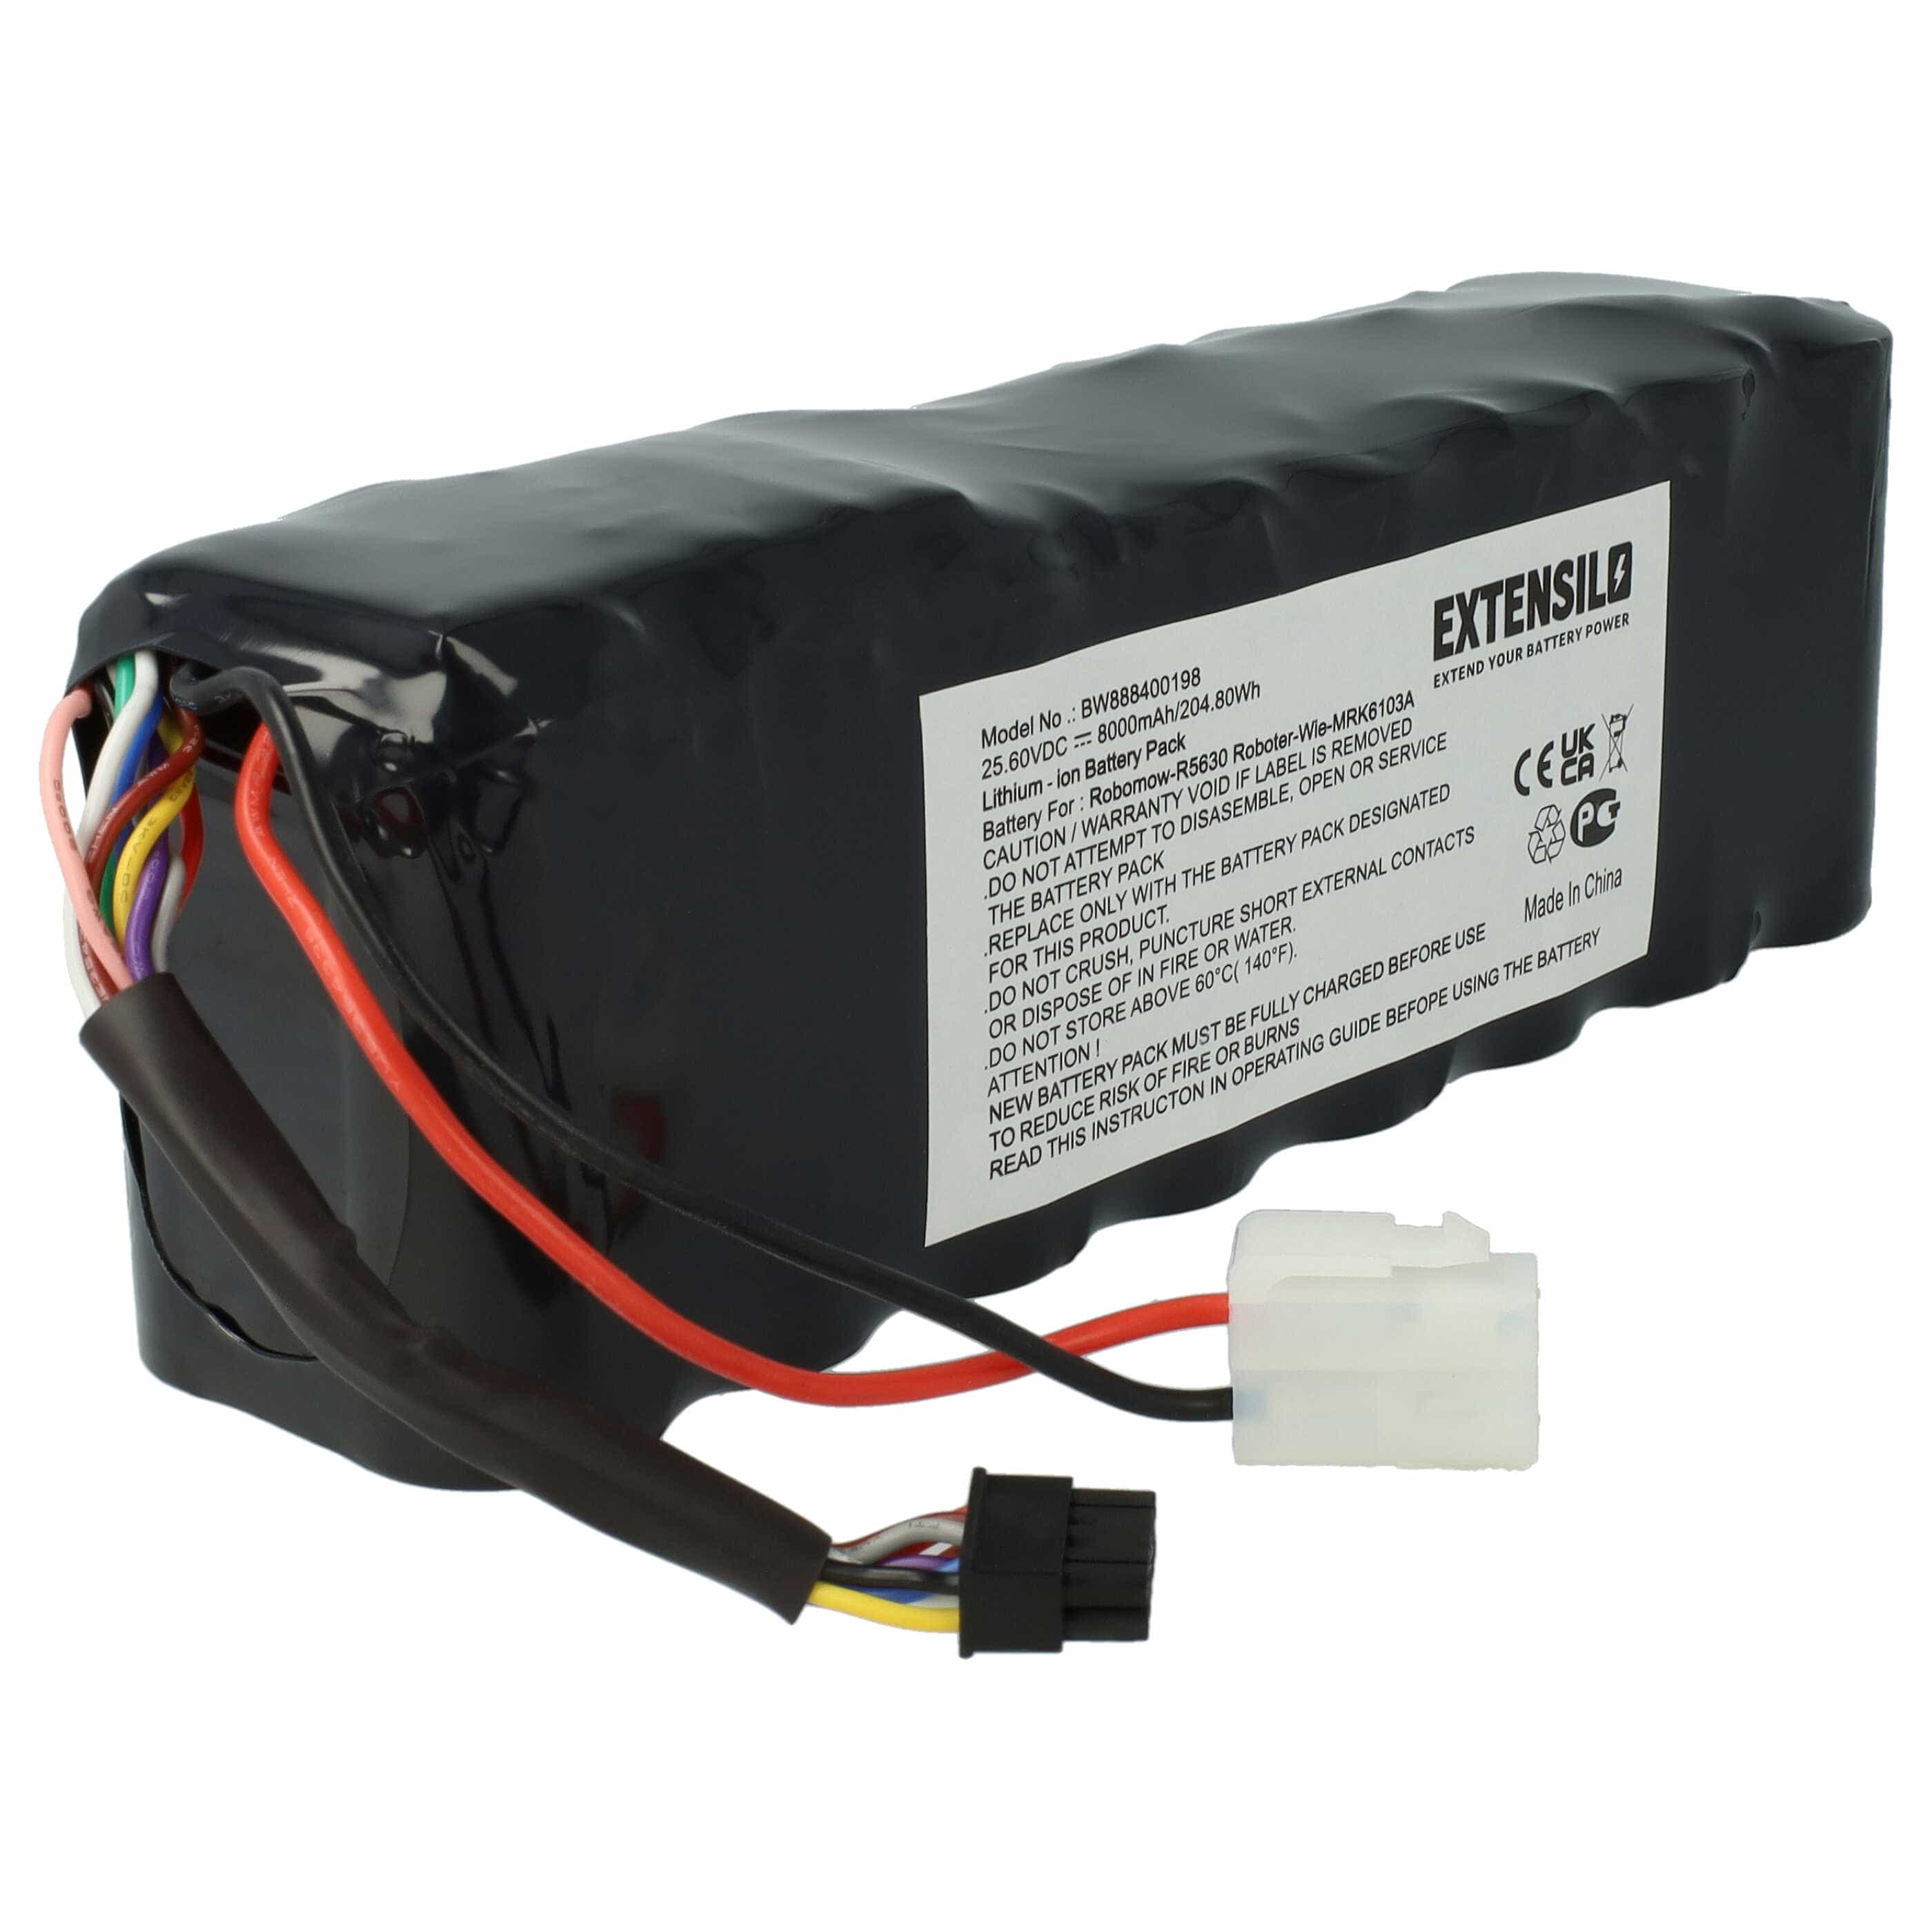 Lawnmower Battery Replacement for MRK6103A, MRK6105A, BAT6001B, BAT6000A, BAT6000C - 8000mAh 25.6V Li-Ion